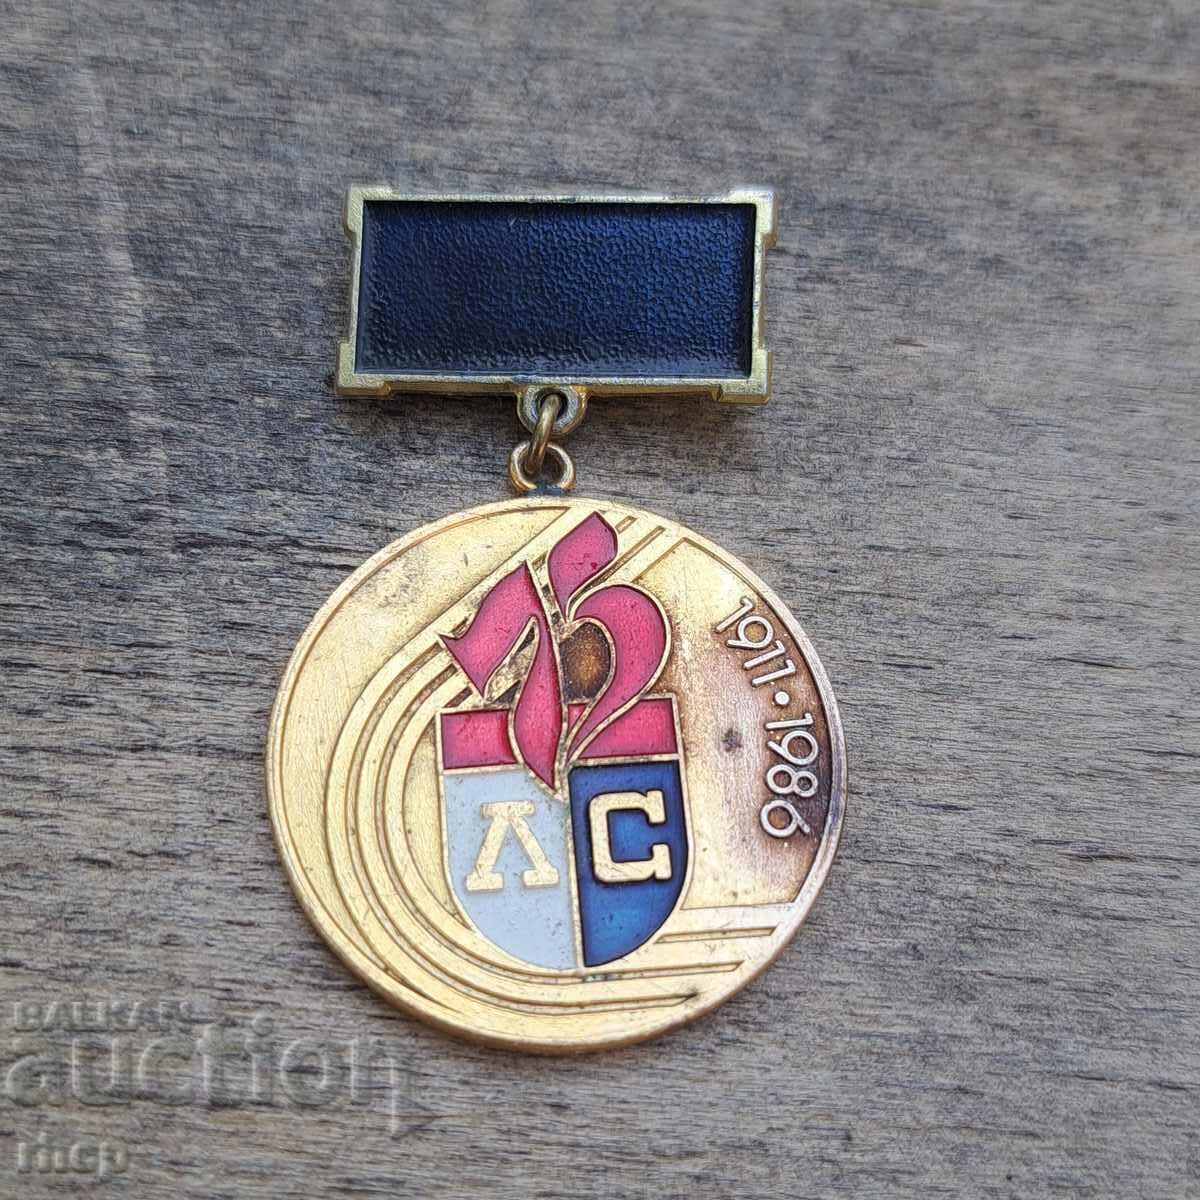 Levski Spartak 75 years 1911-1986 sign anniversary medal